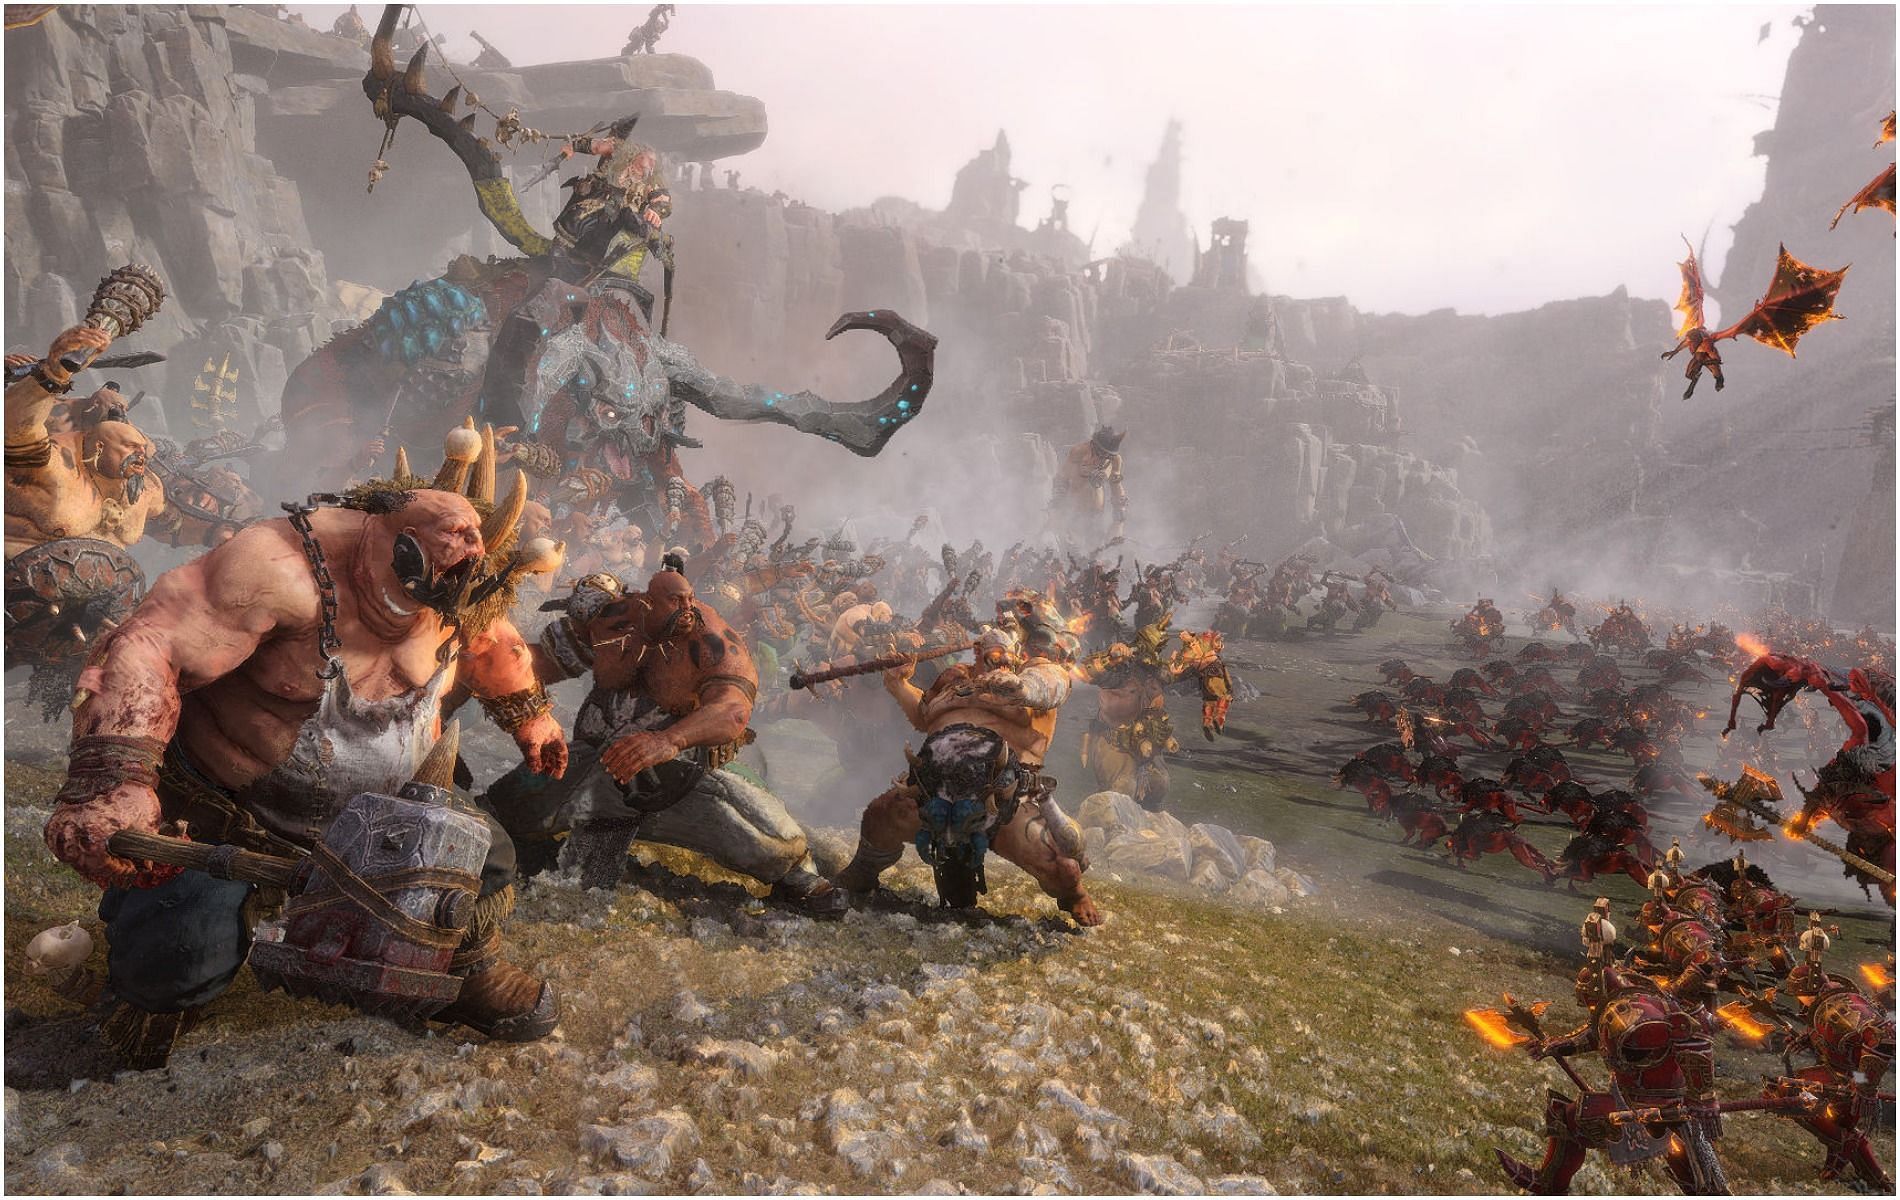 The Ogre Kingdoms race is a DLC of the game (Image via SEGA)